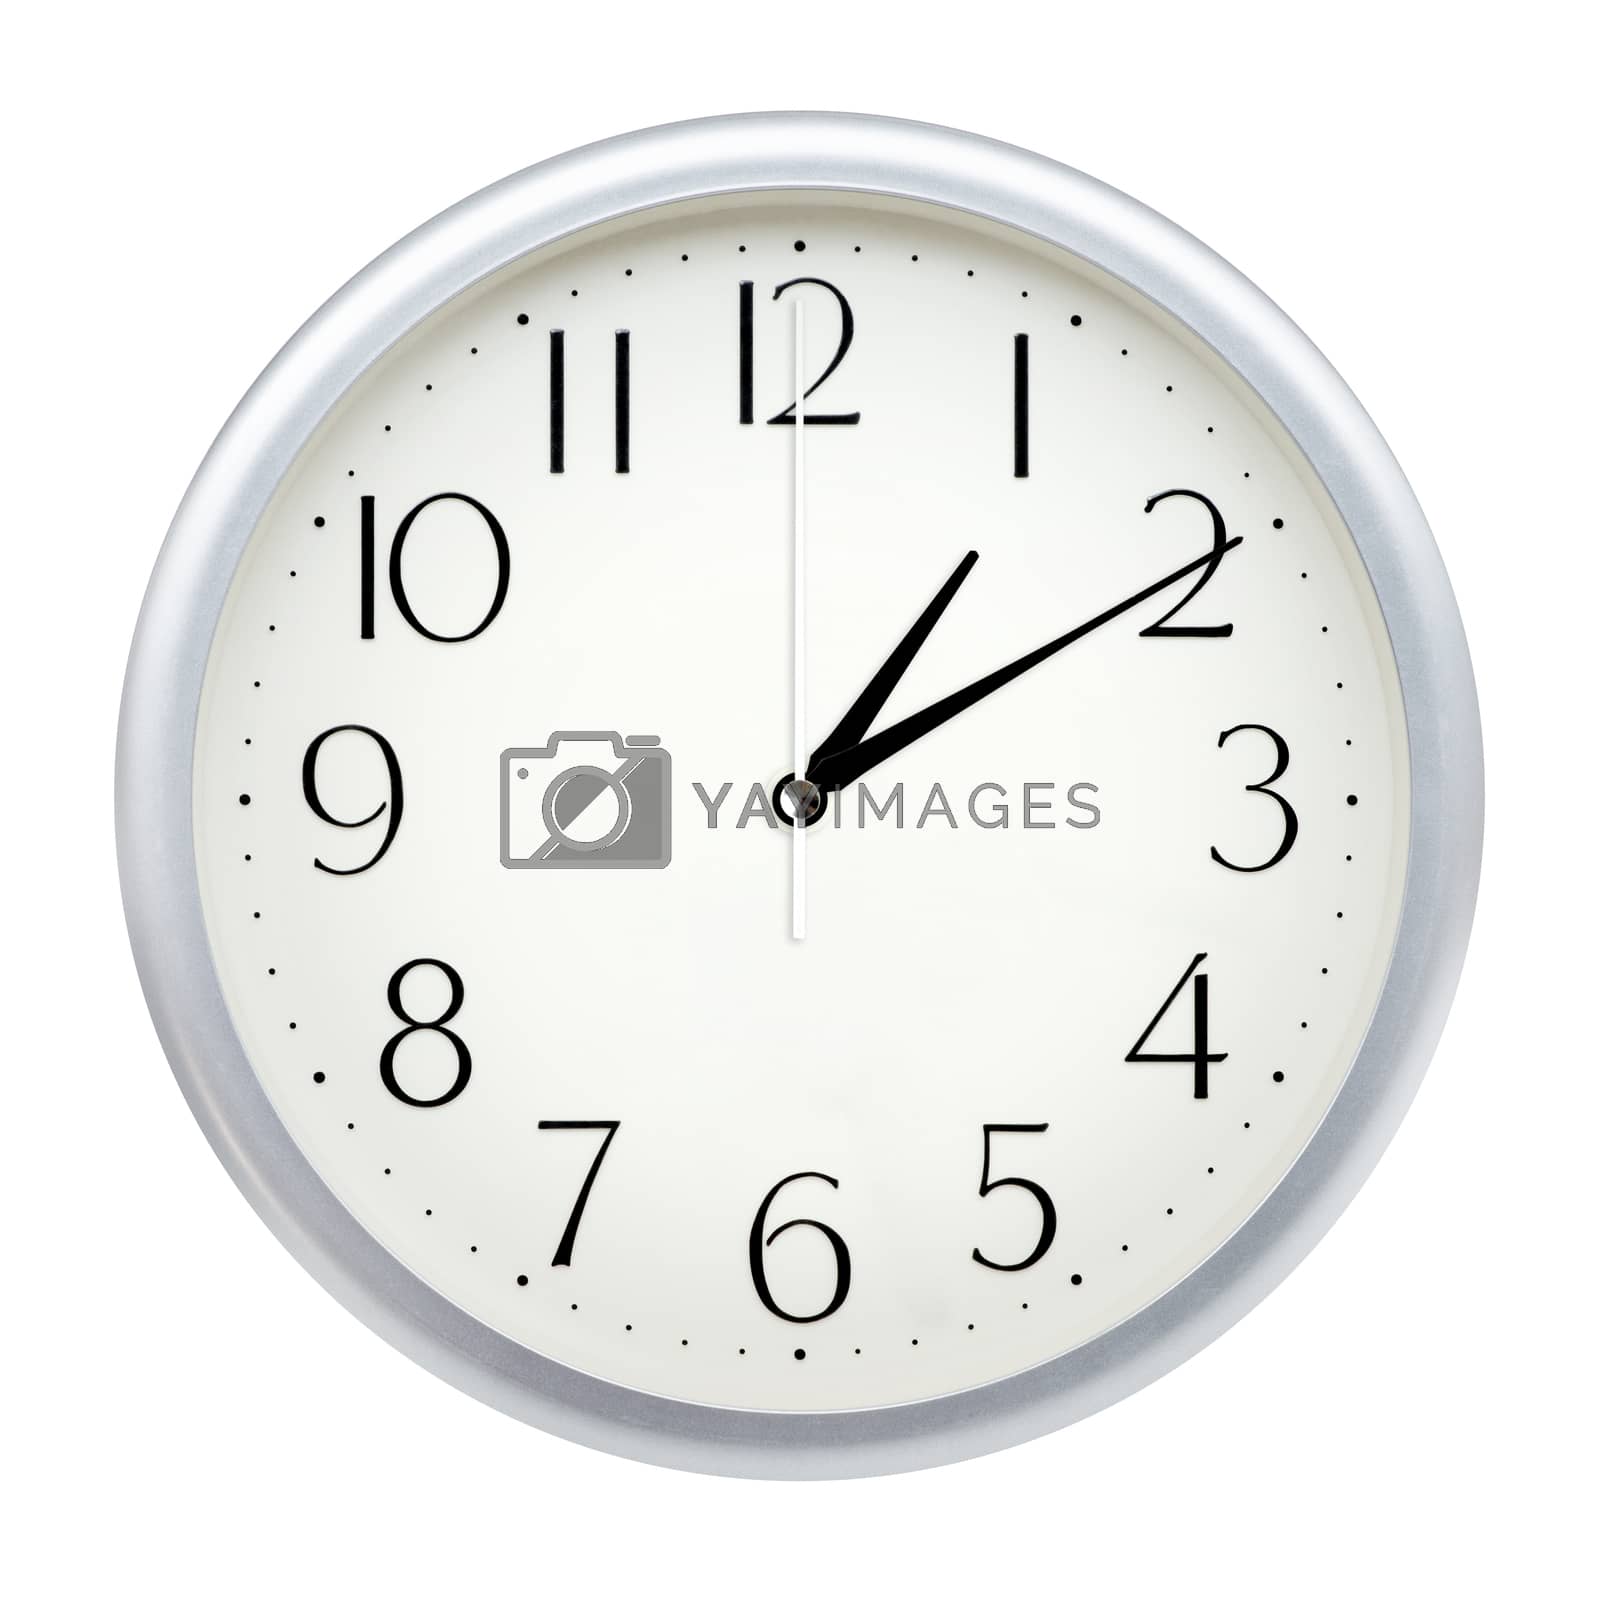 Royalty free image of Analog wall clock by szefei